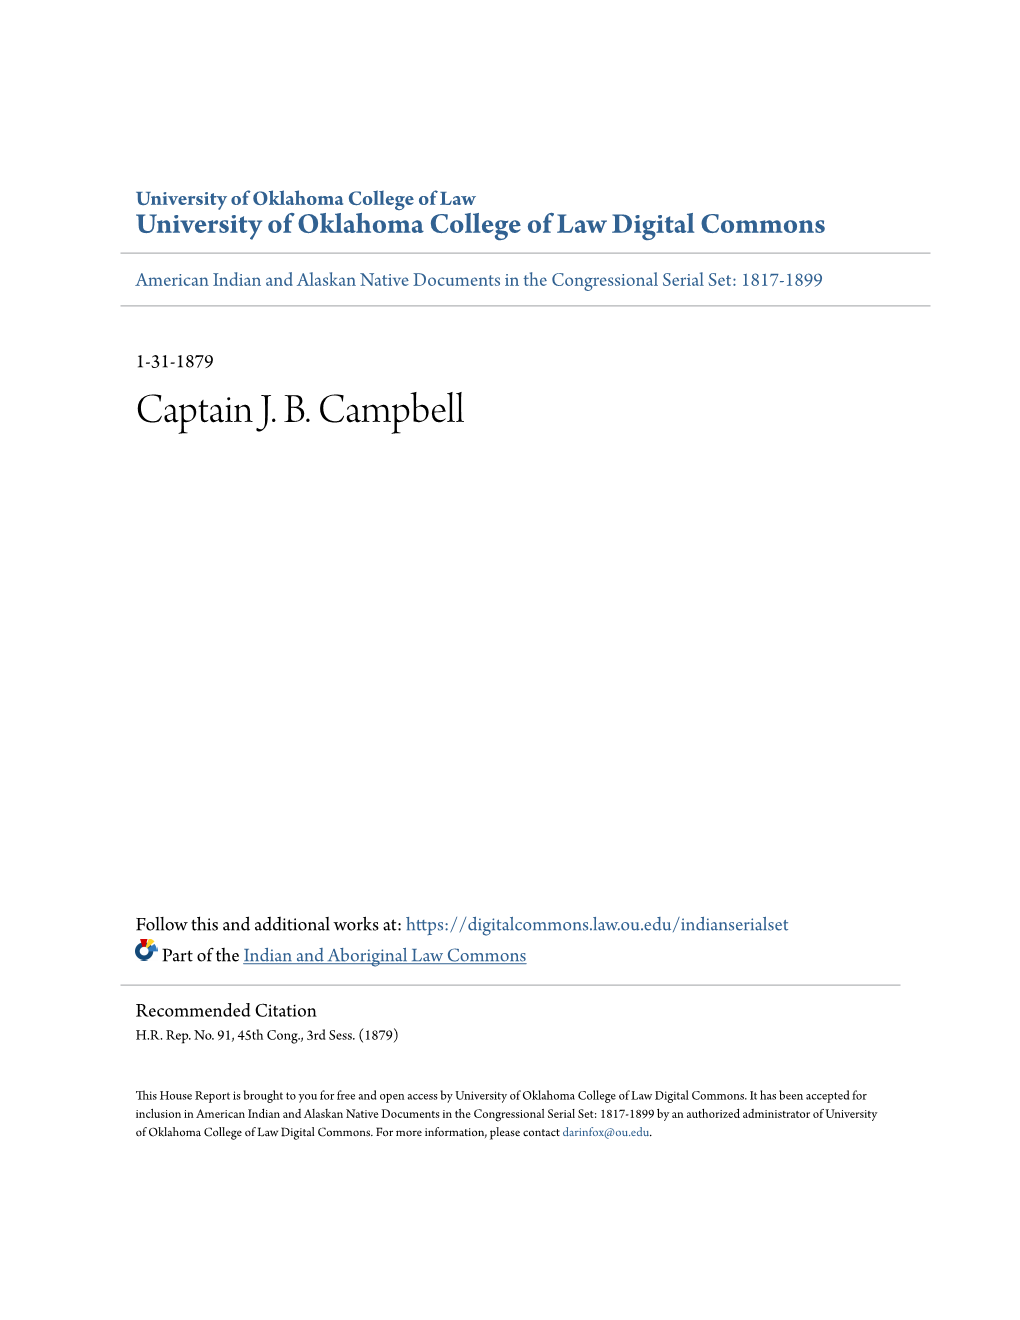 Captain J. B. Campbell